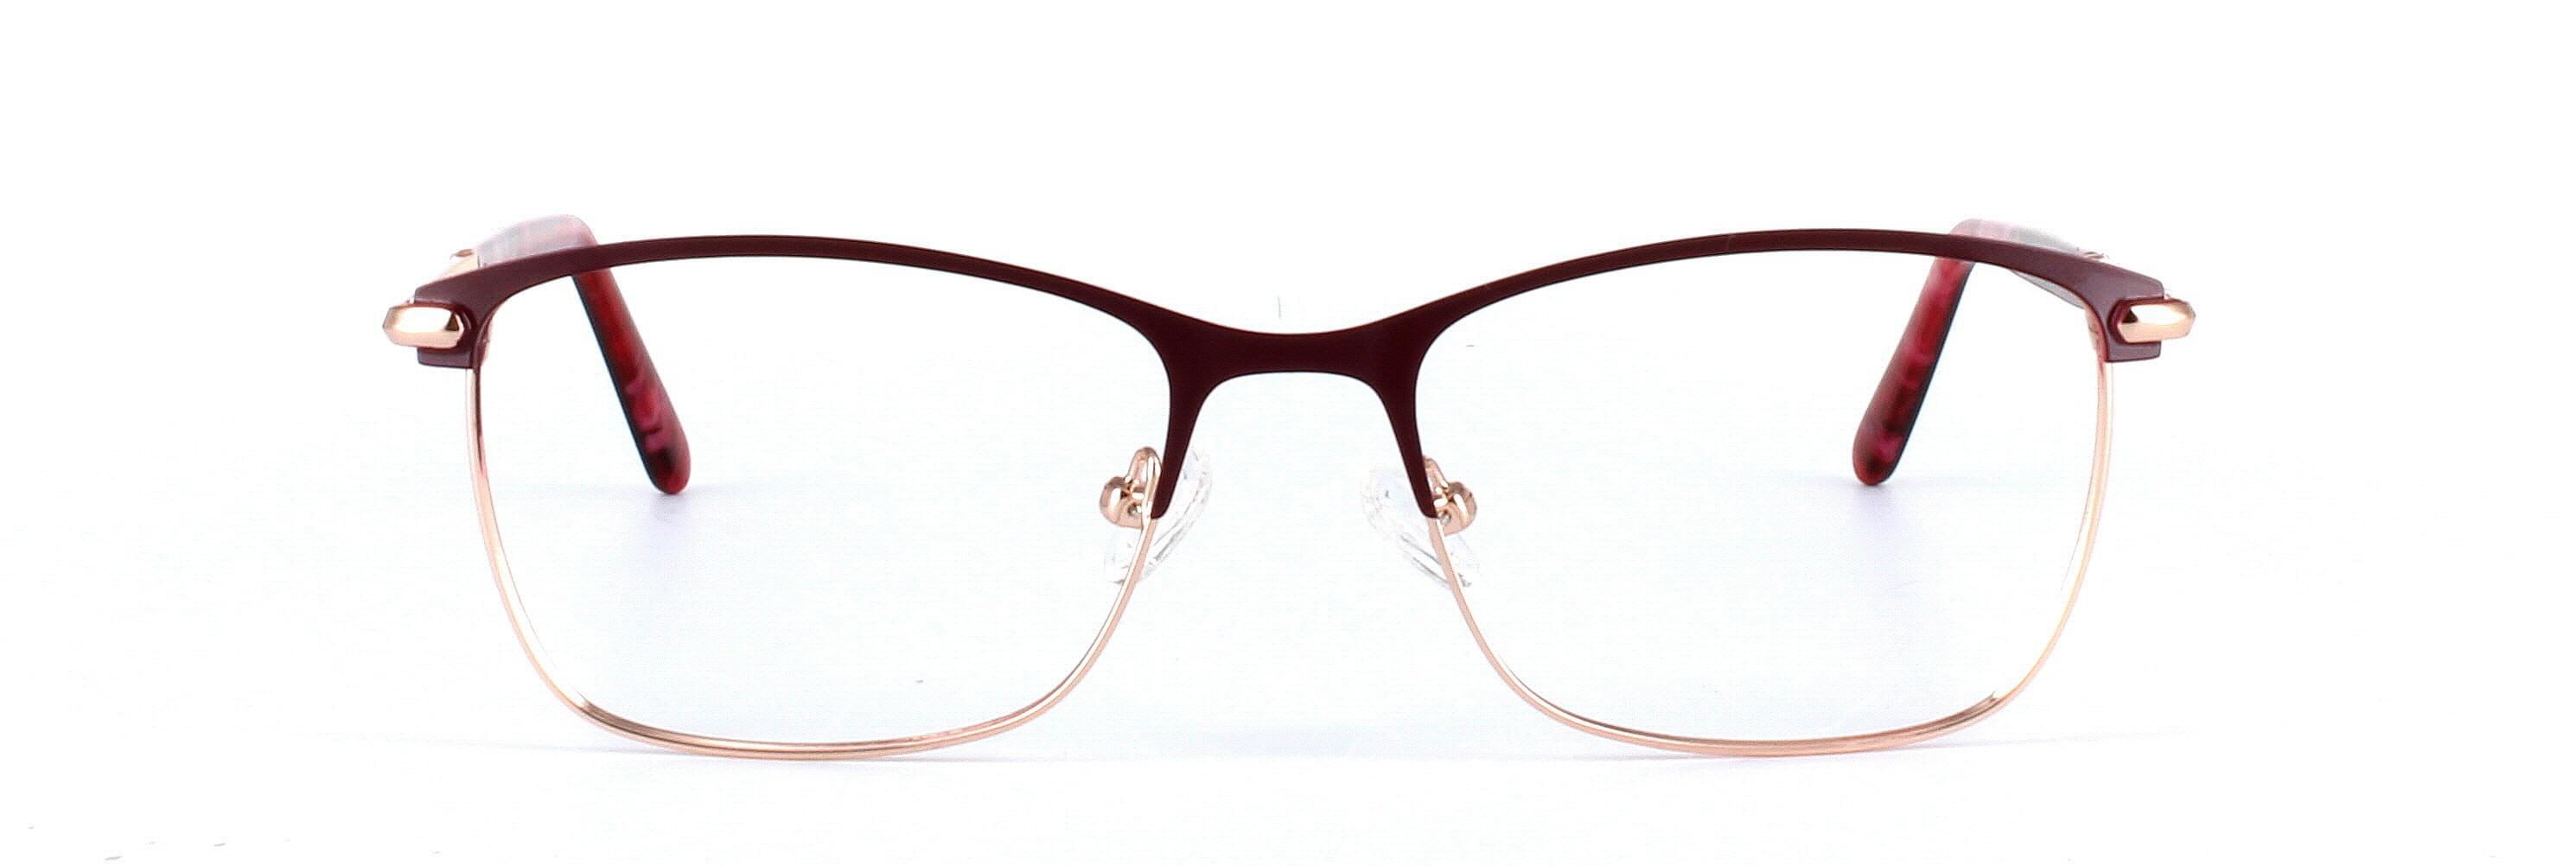 Pheobie Burgundy Full Rim Oval Metal Glasses - Image View 5